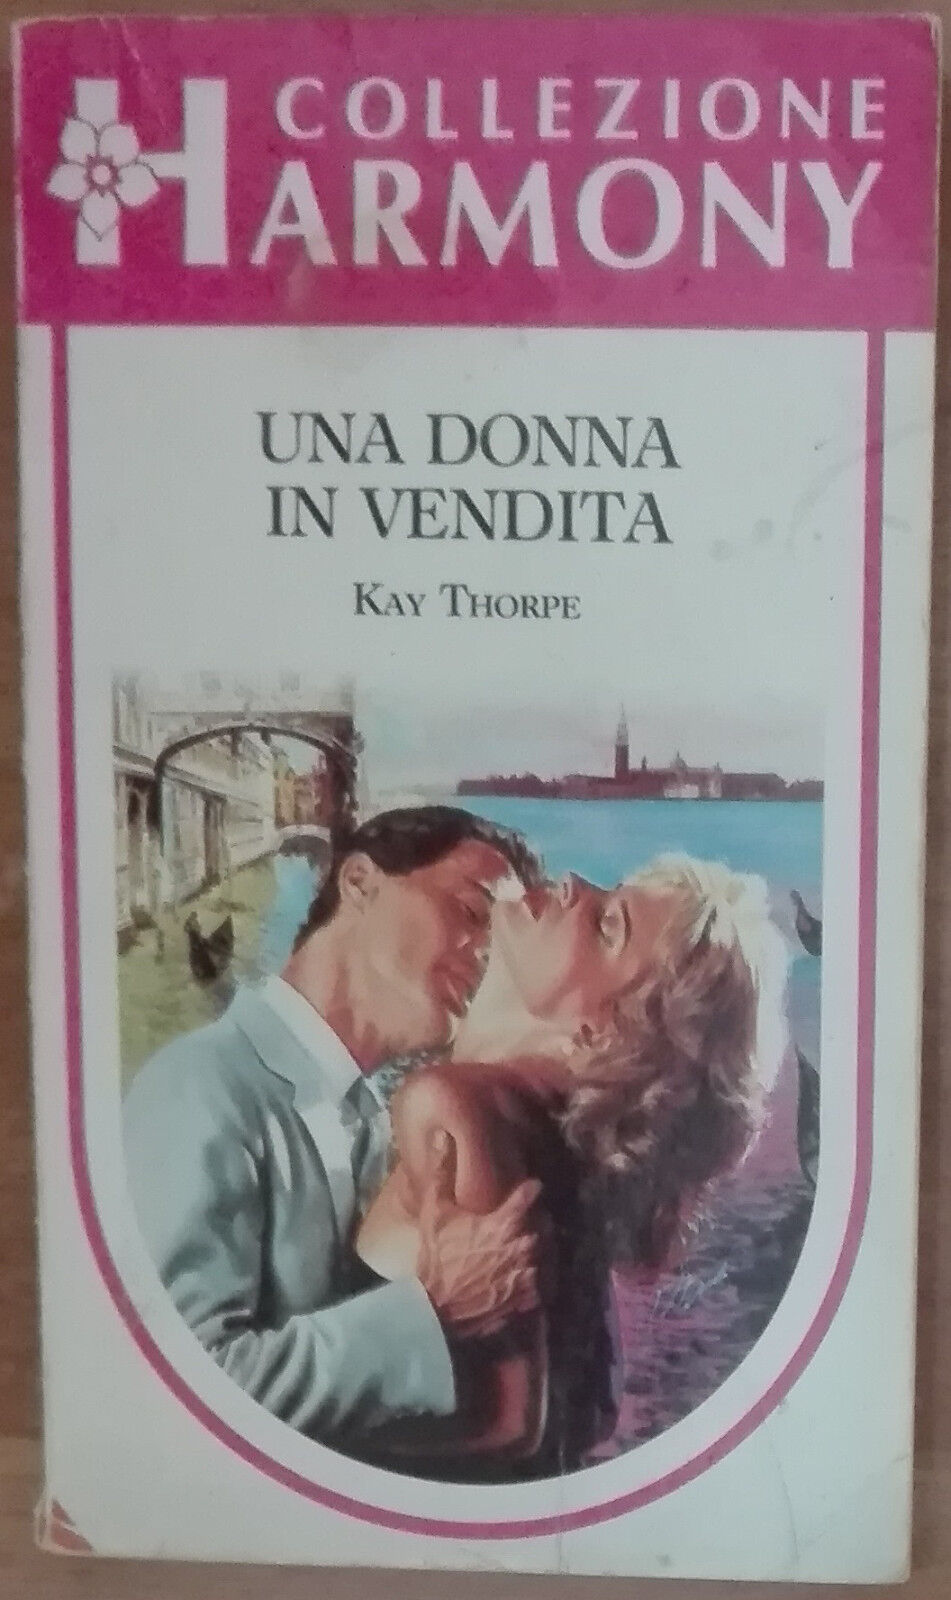 Una donna in vendita - Kay Thorpe - Harlequin Mondadori,1986 - A